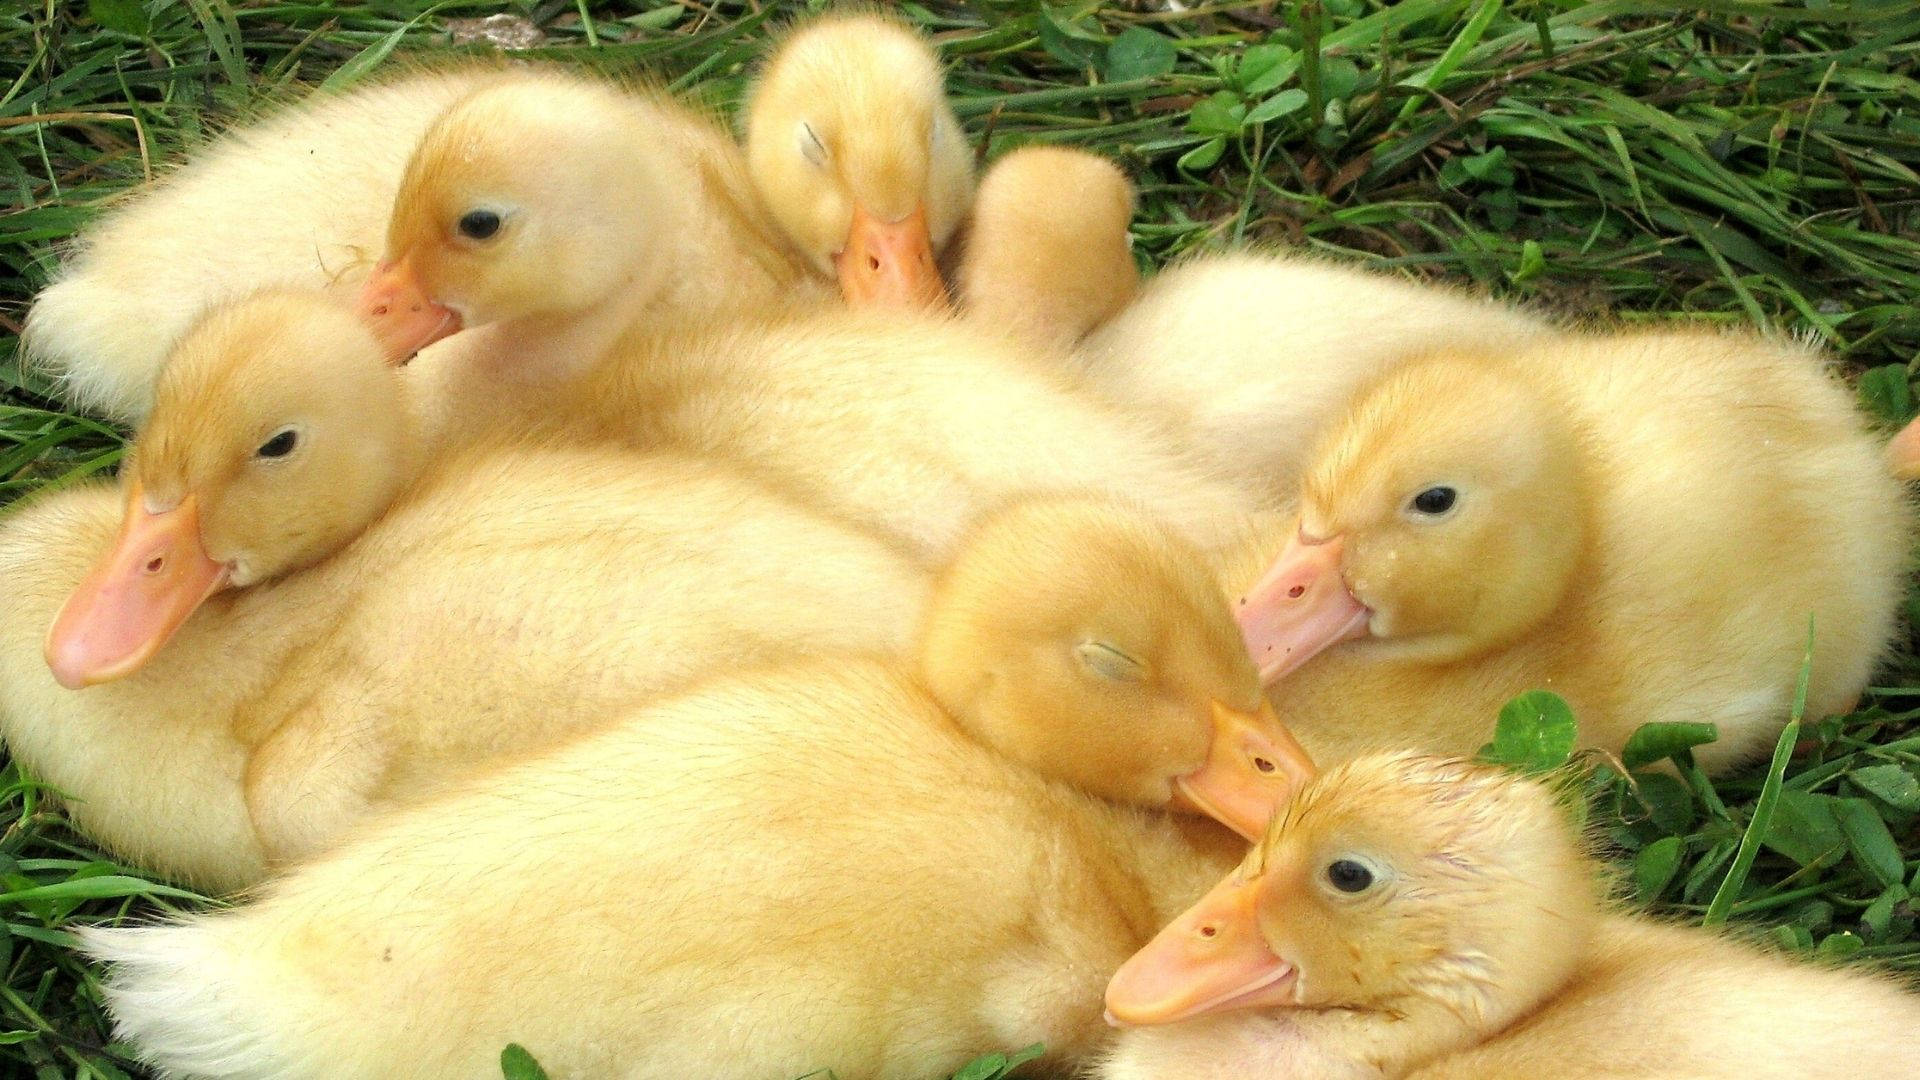 Baby Ducks Sleeping Together Background